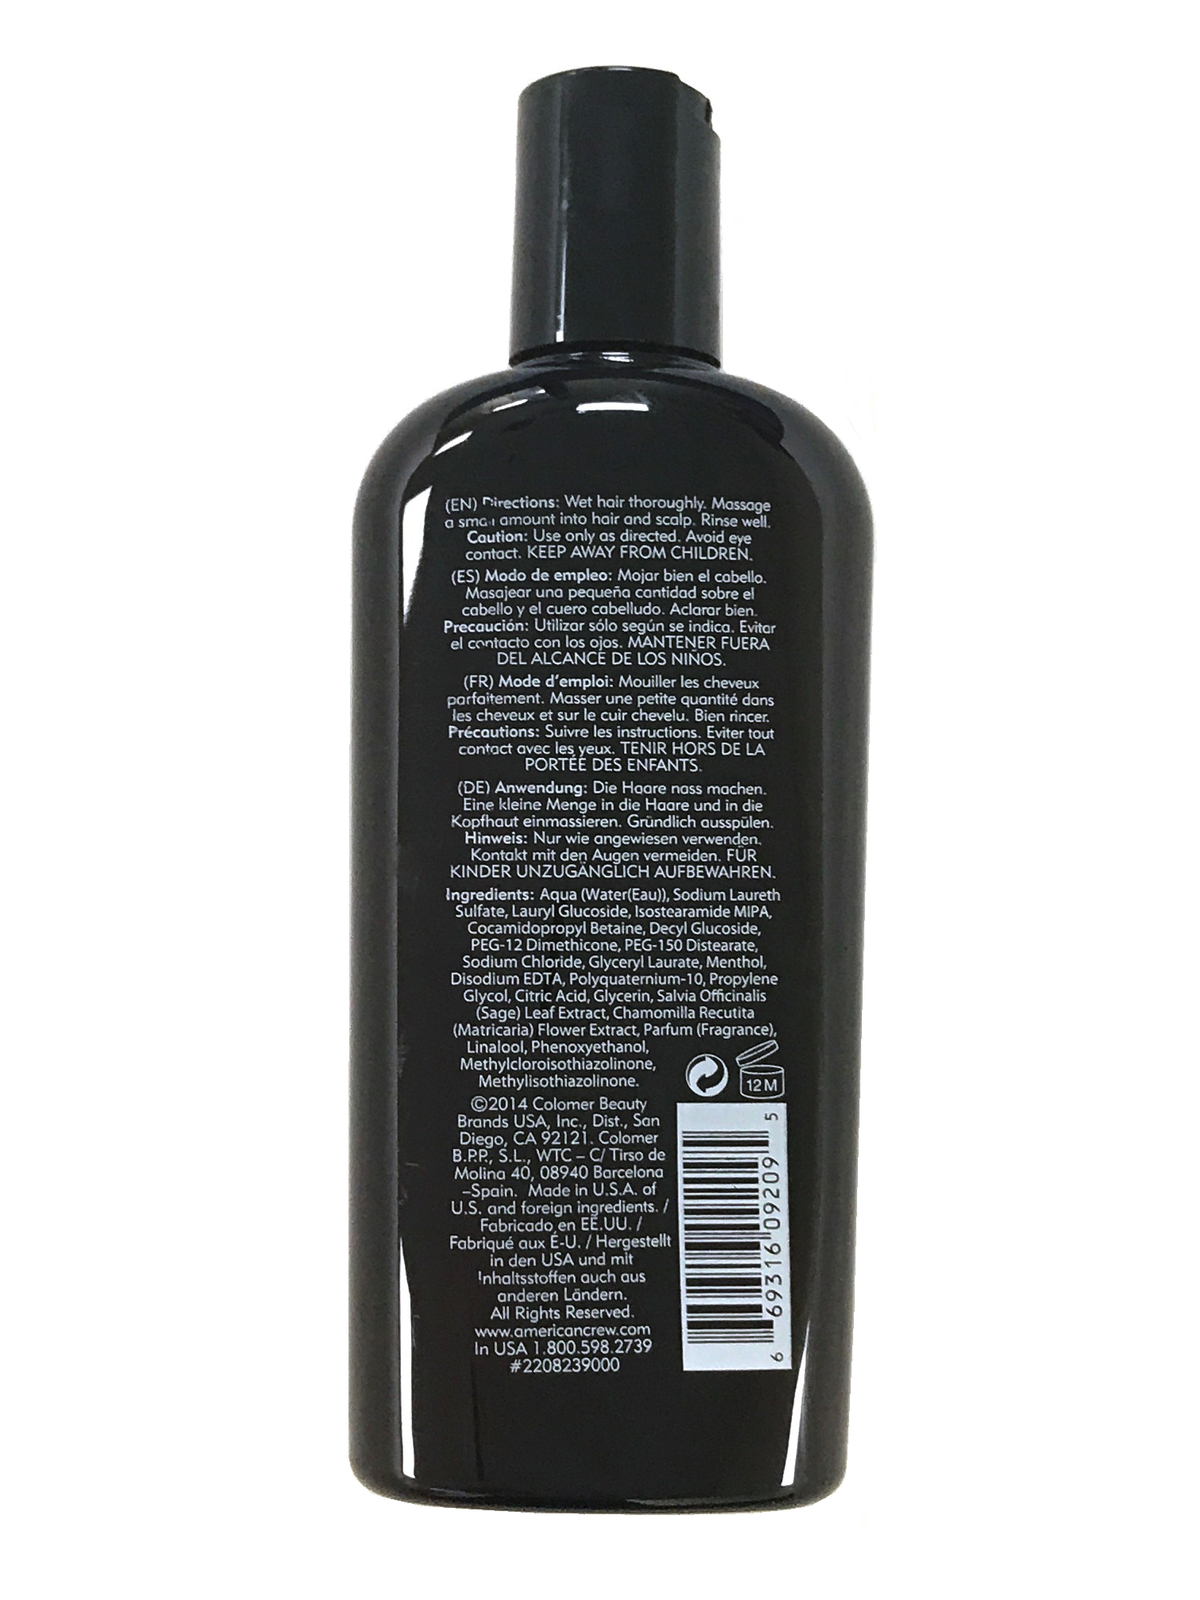 Americancrew shampoo2095  1